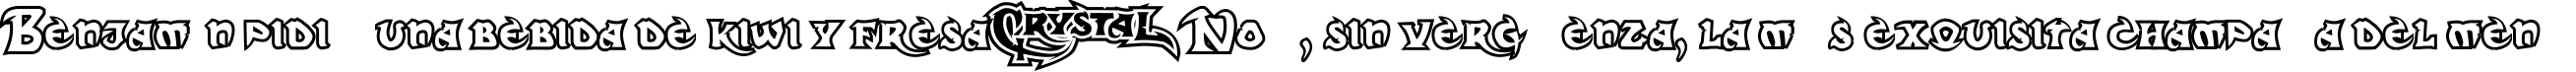 Пример написания шрифтом Dark Crystal Outline текста на испанском